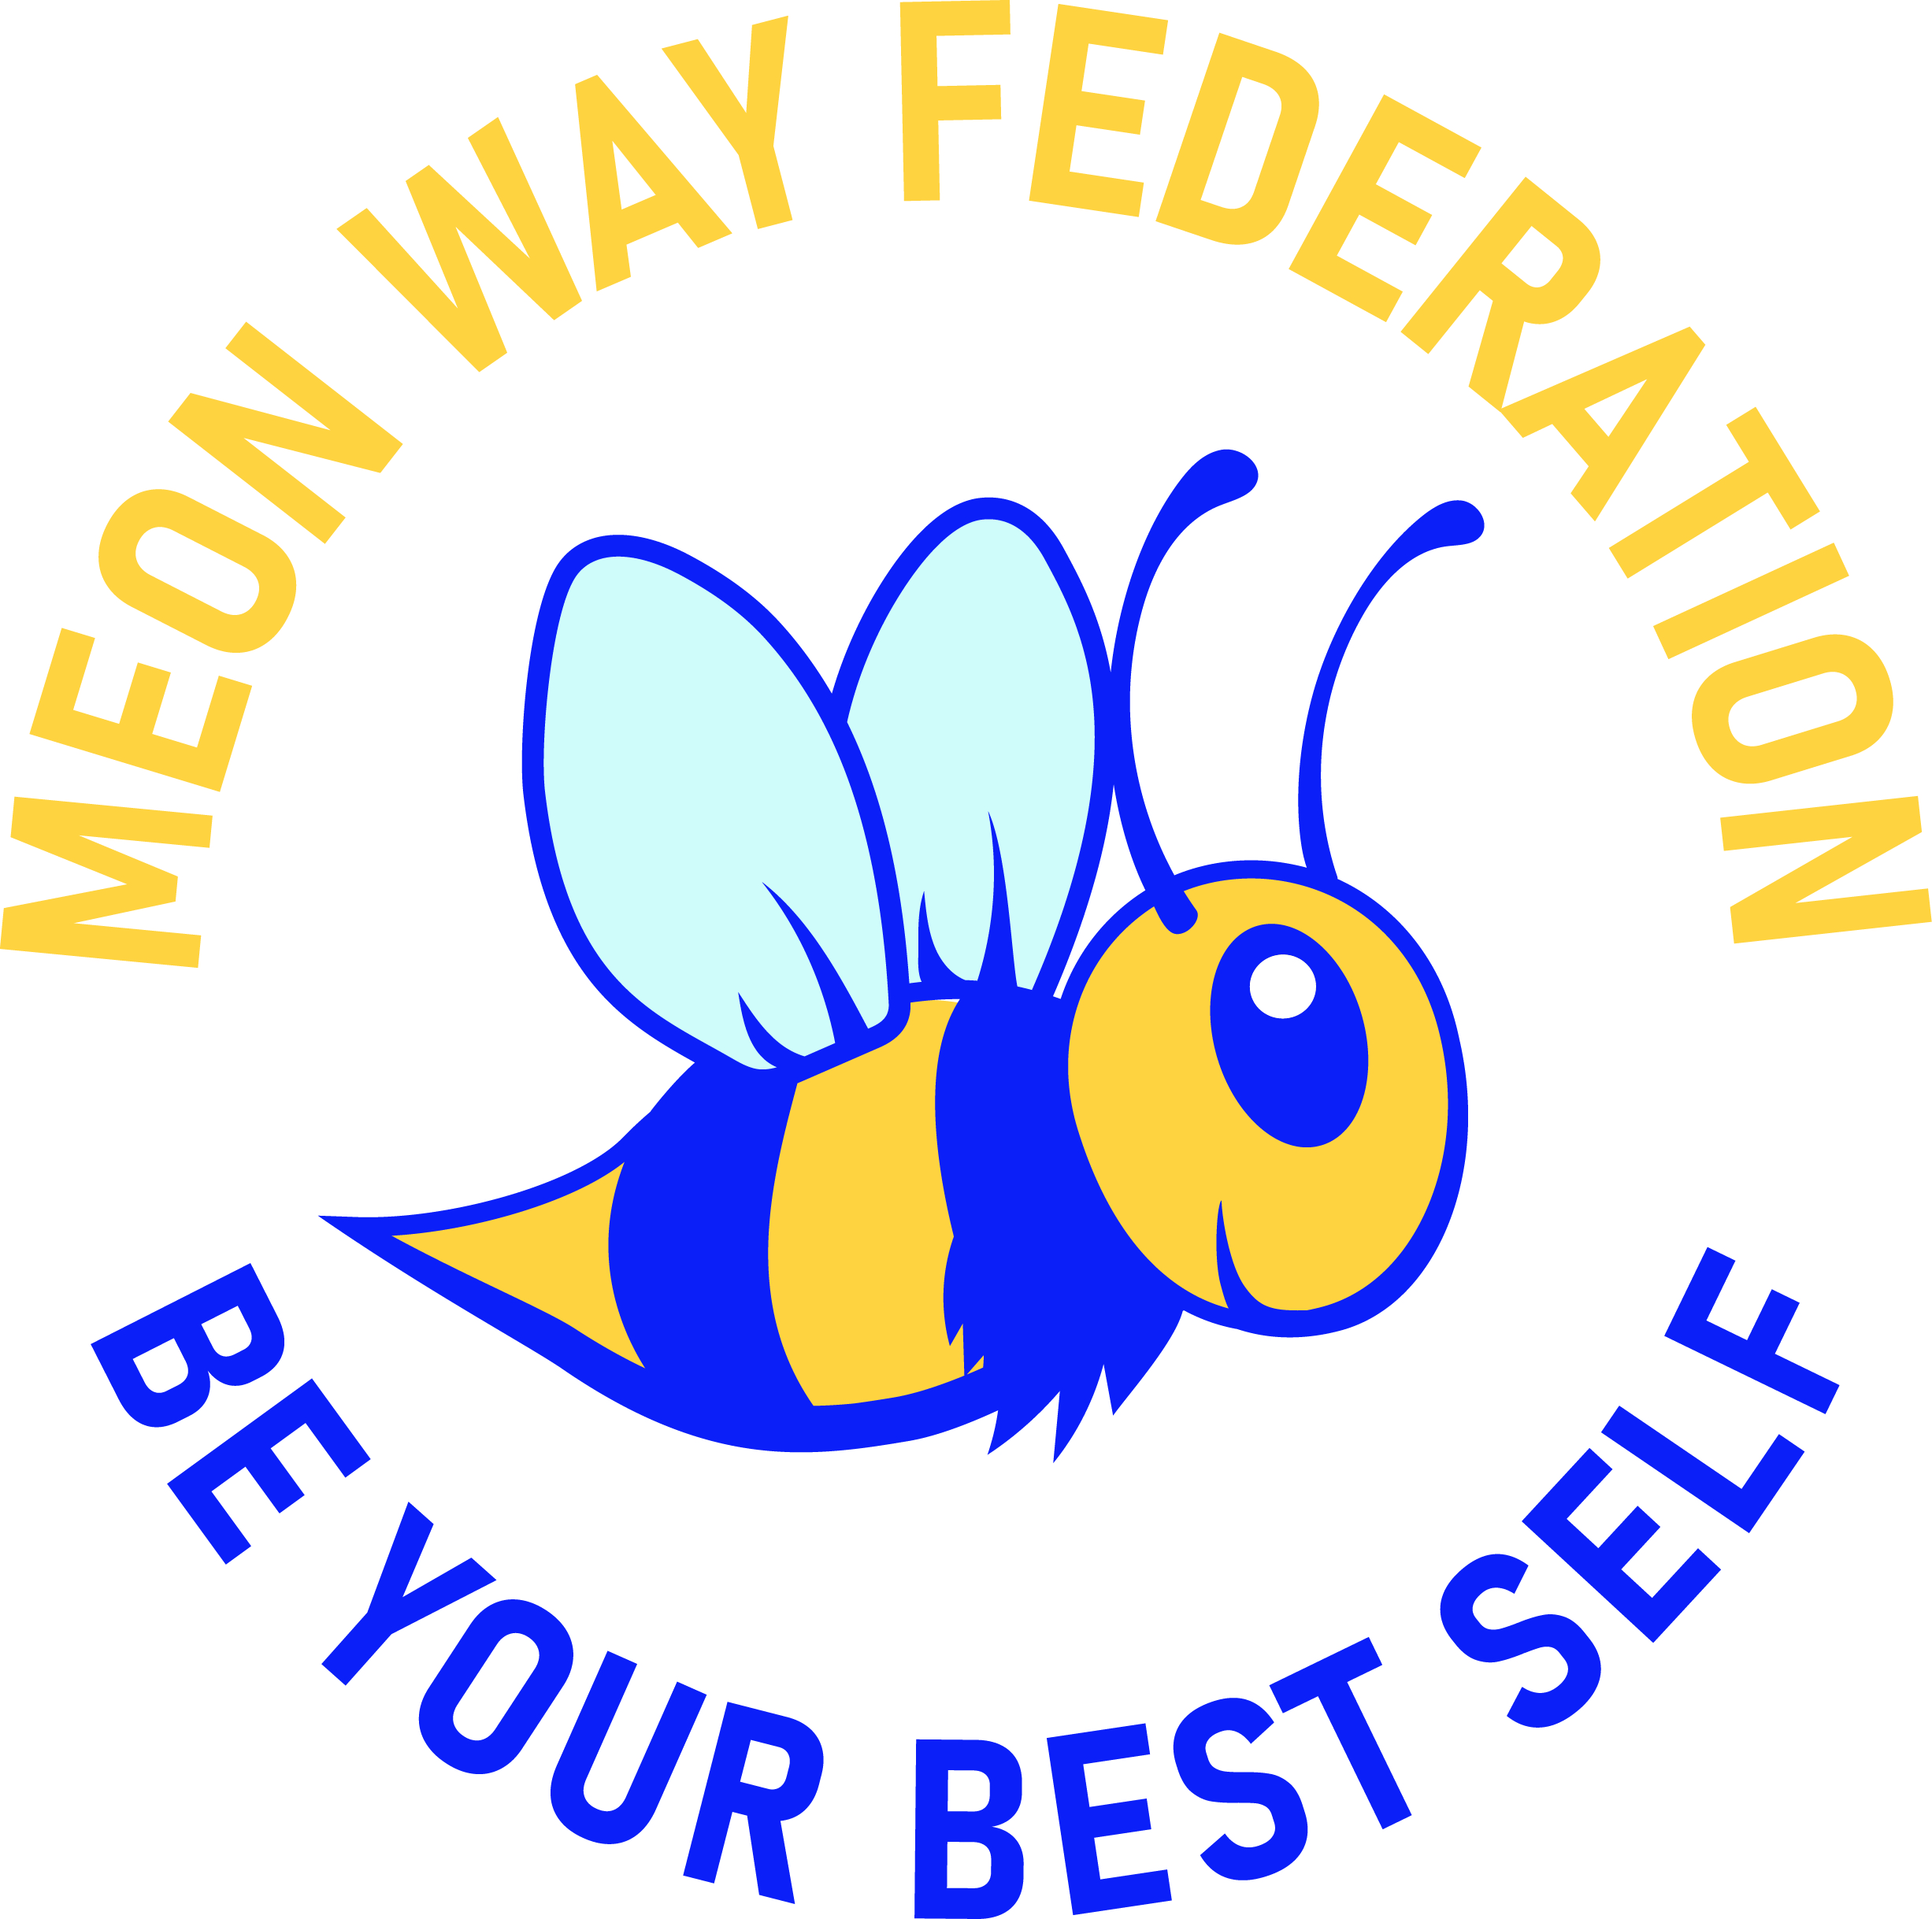 Meon Way Federation logo  - CMYK (002).jpg